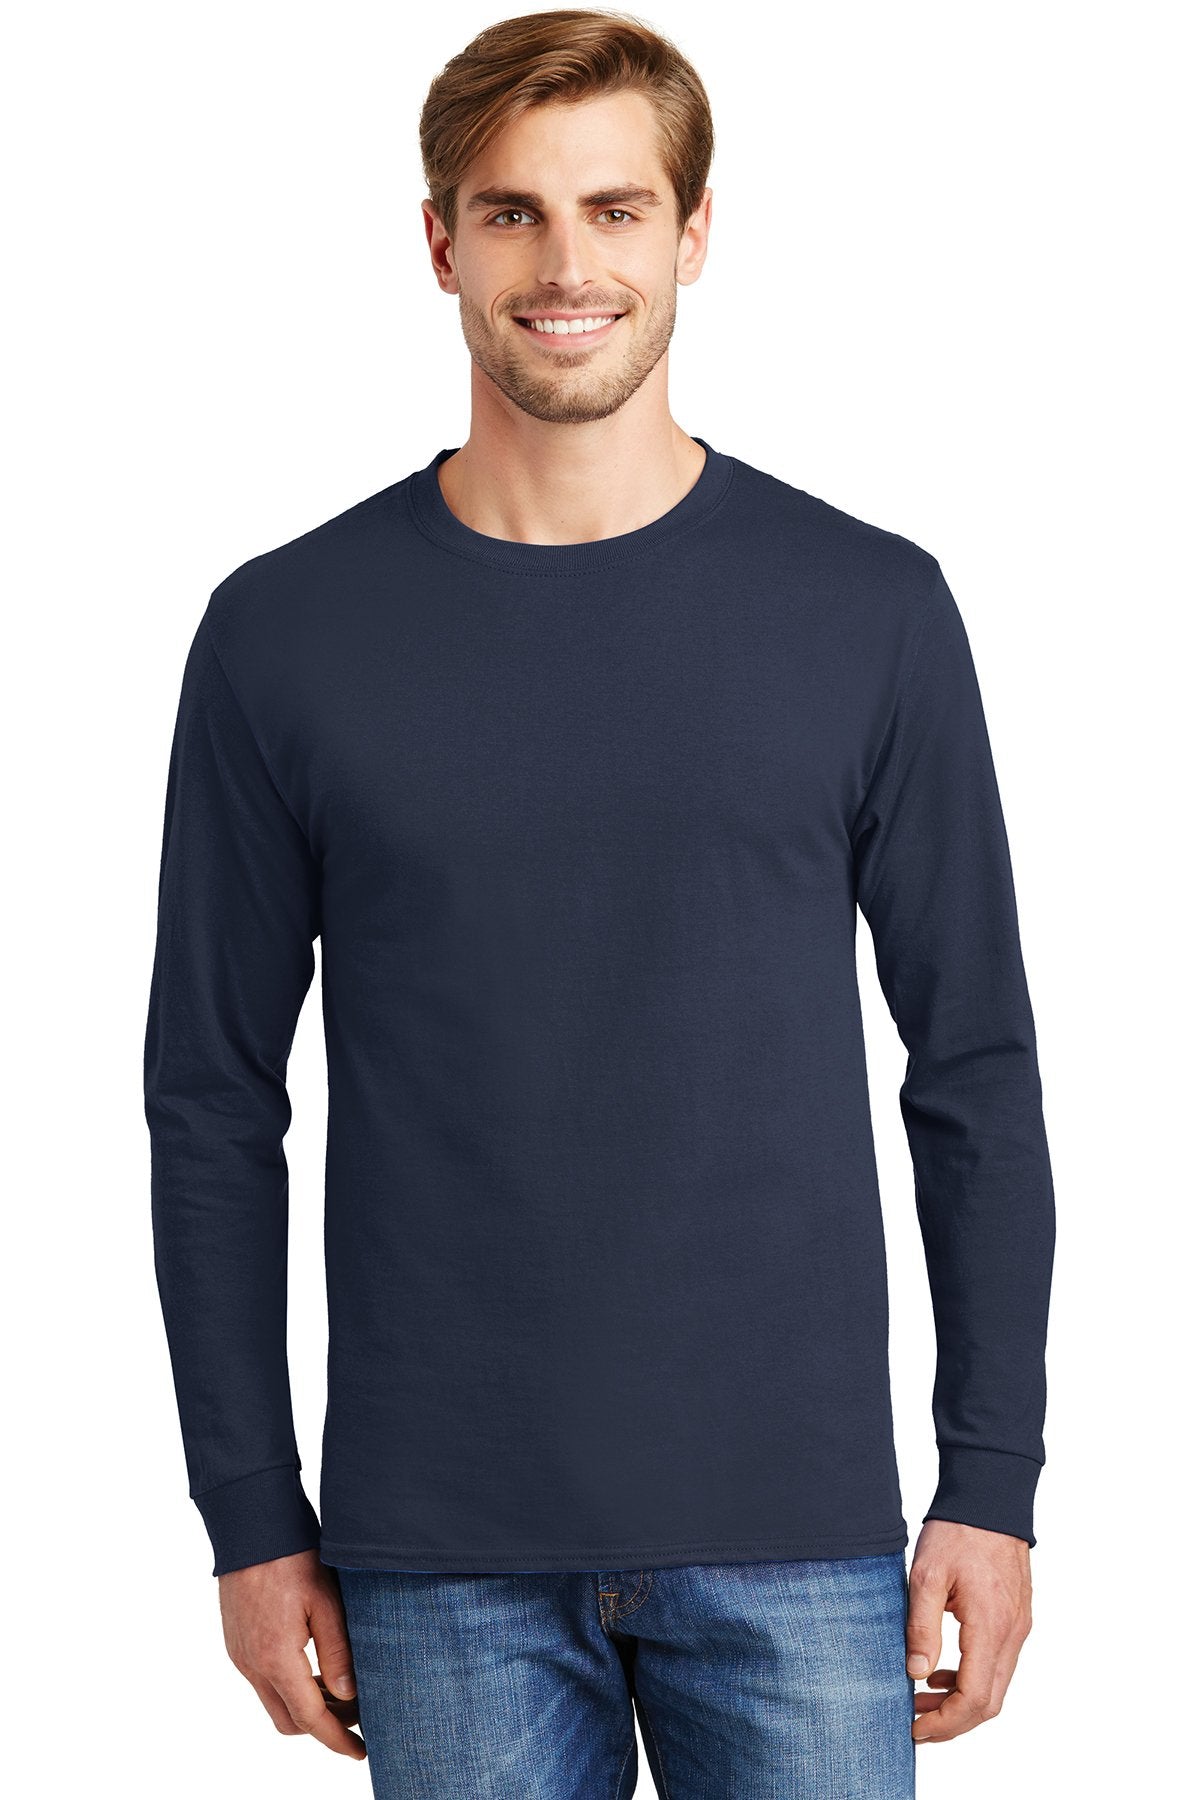 hanes tagless cotton long sleeve t shirt 5586 navy